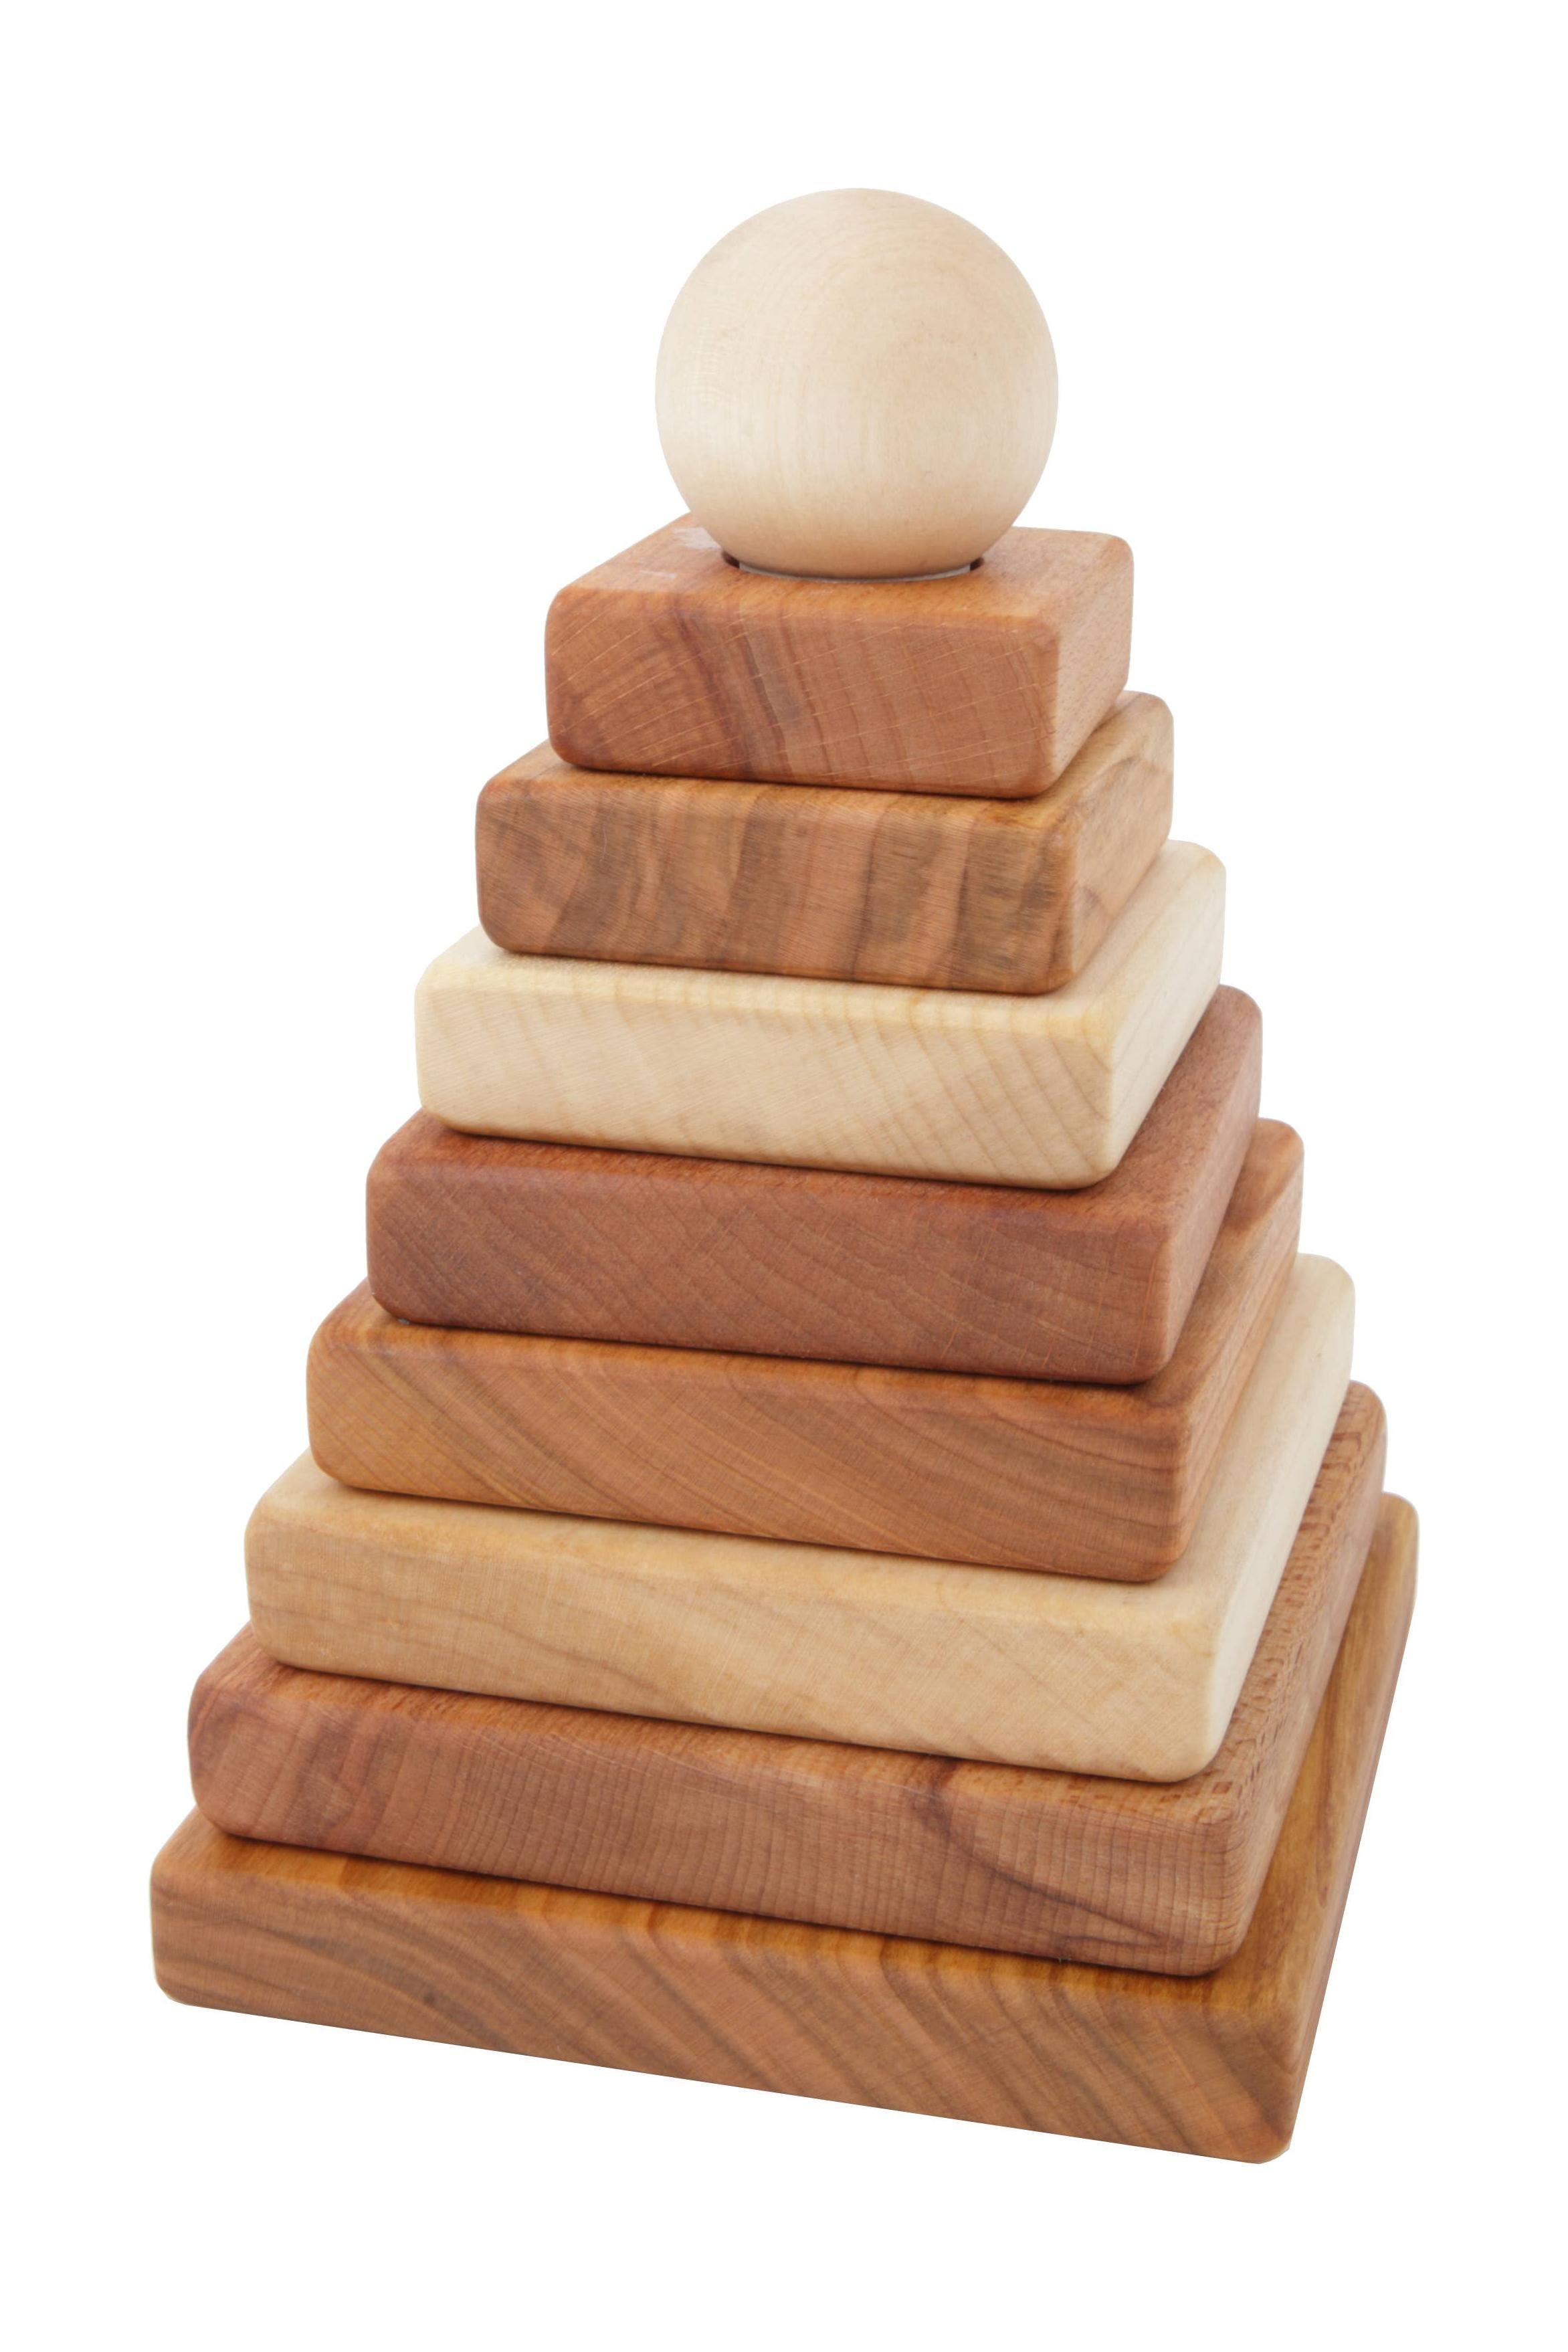 Stacking Montessori Toy Pyramid - Natural